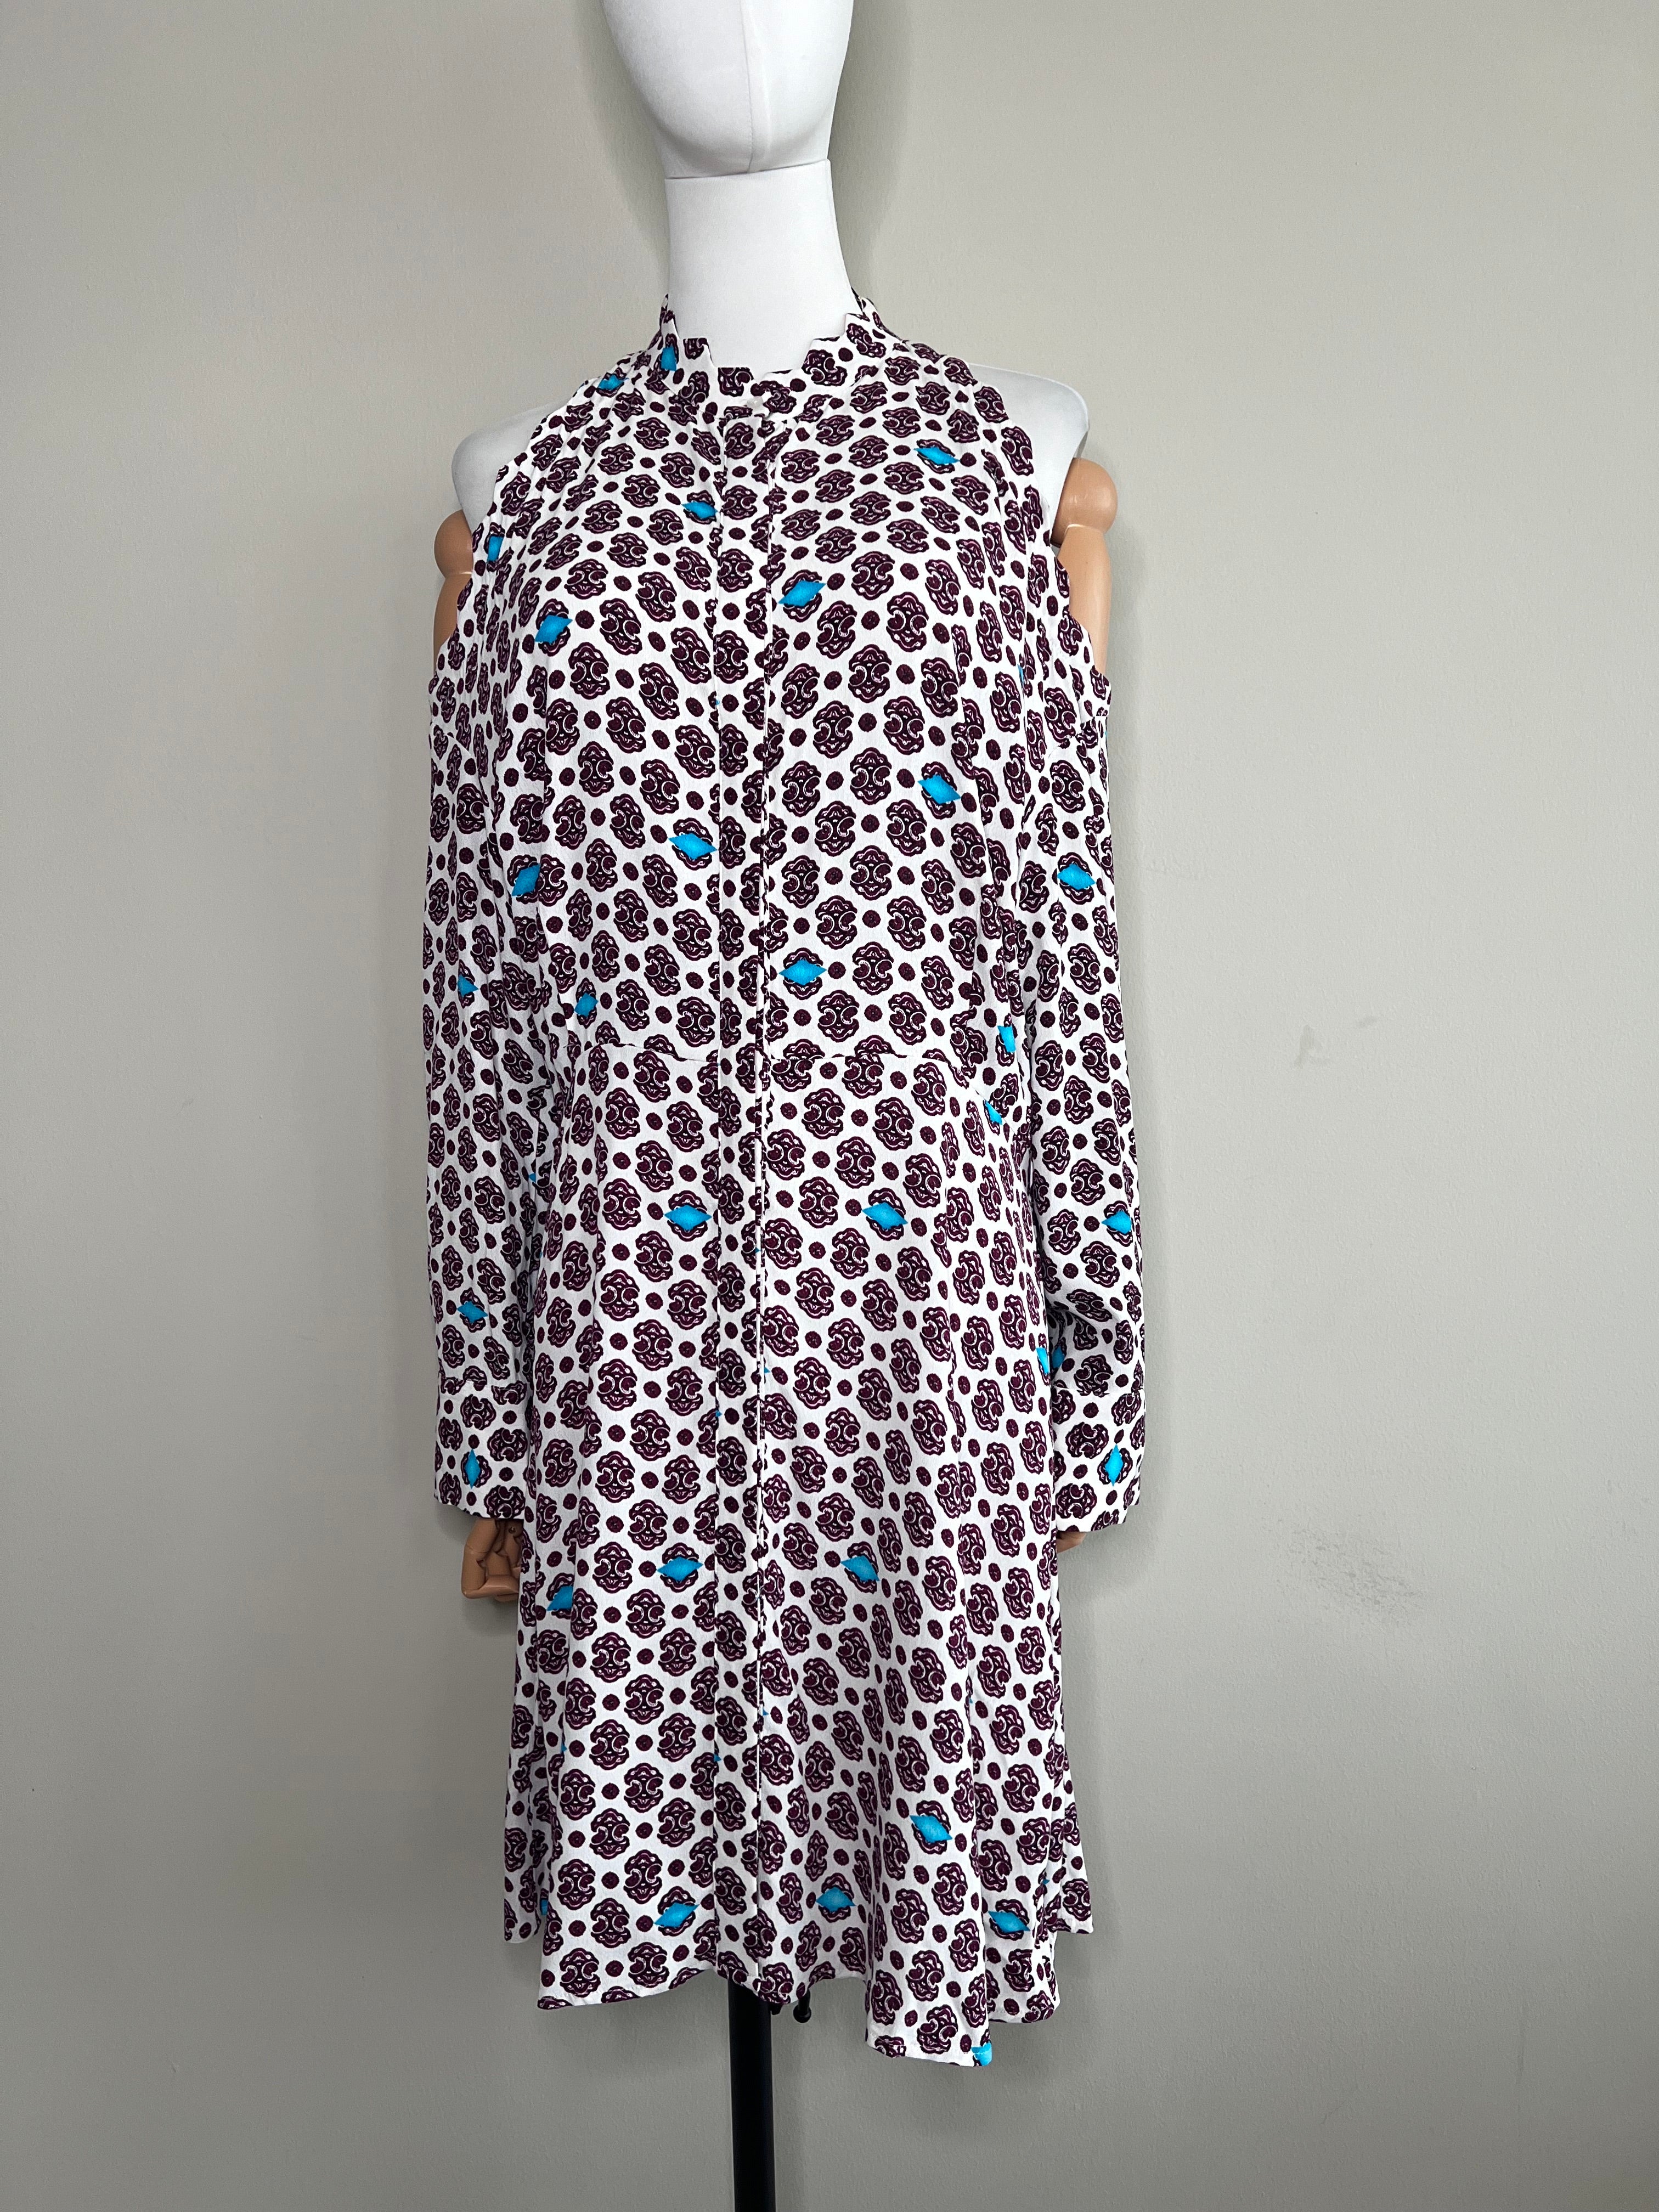 Purple tuscan print cold shoulder knee length dress  - MAJE